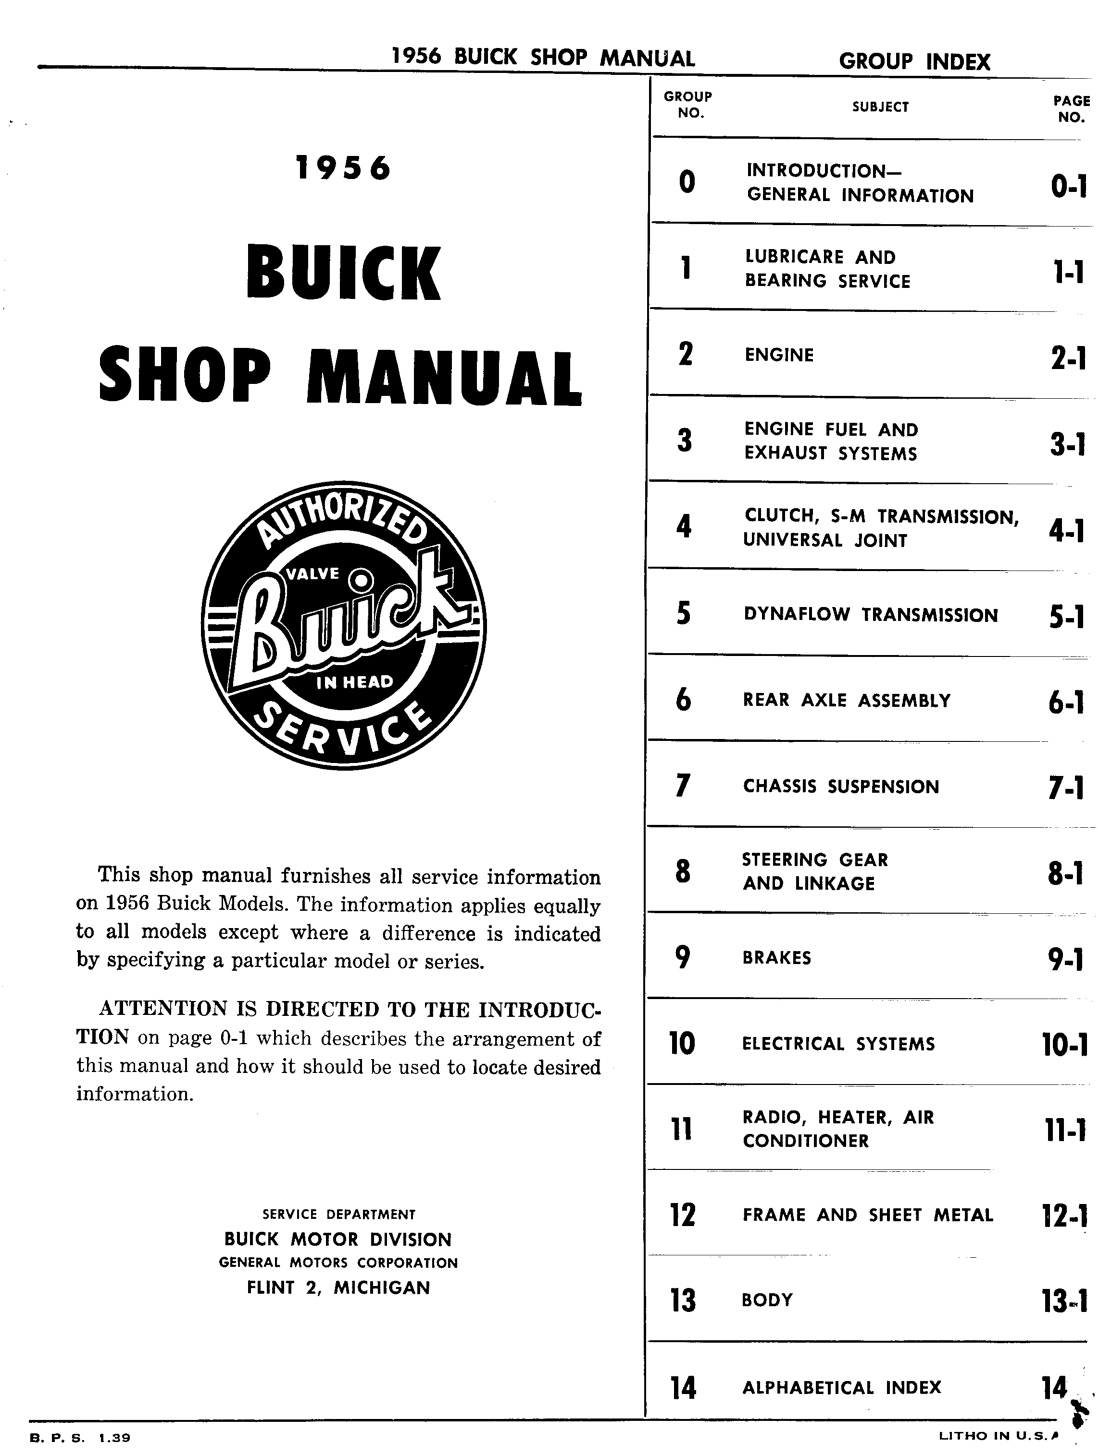 n_01 1956 Buick Shop Manual - Gen Information-002-002.jpg